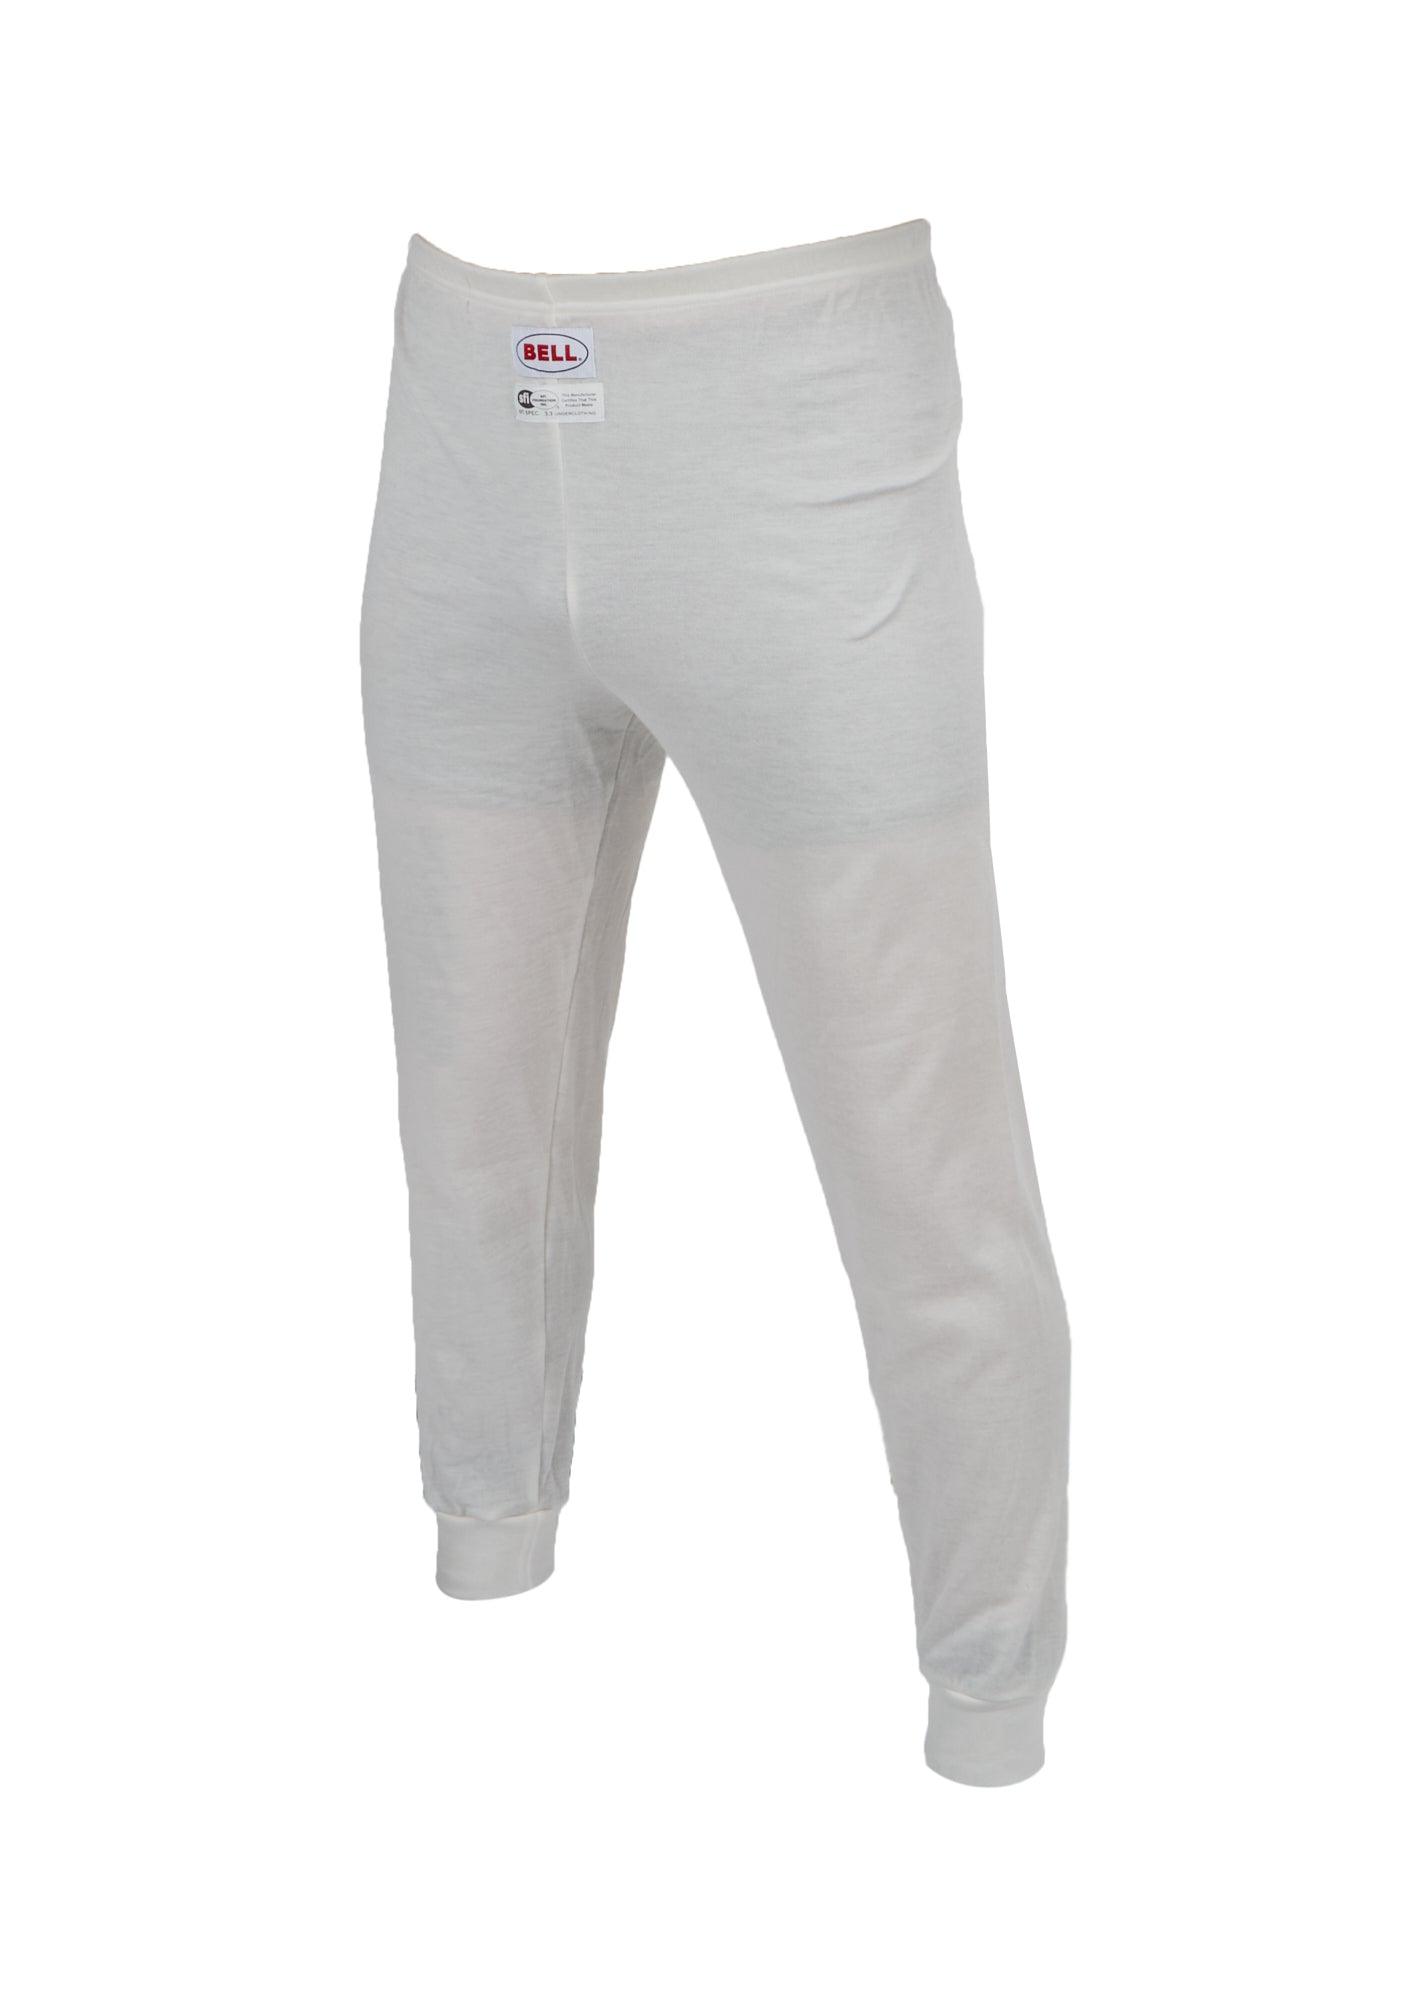 Underwear Bottom SPORT- TX White Small SFI 3.3/5 - Burlile Performance Products